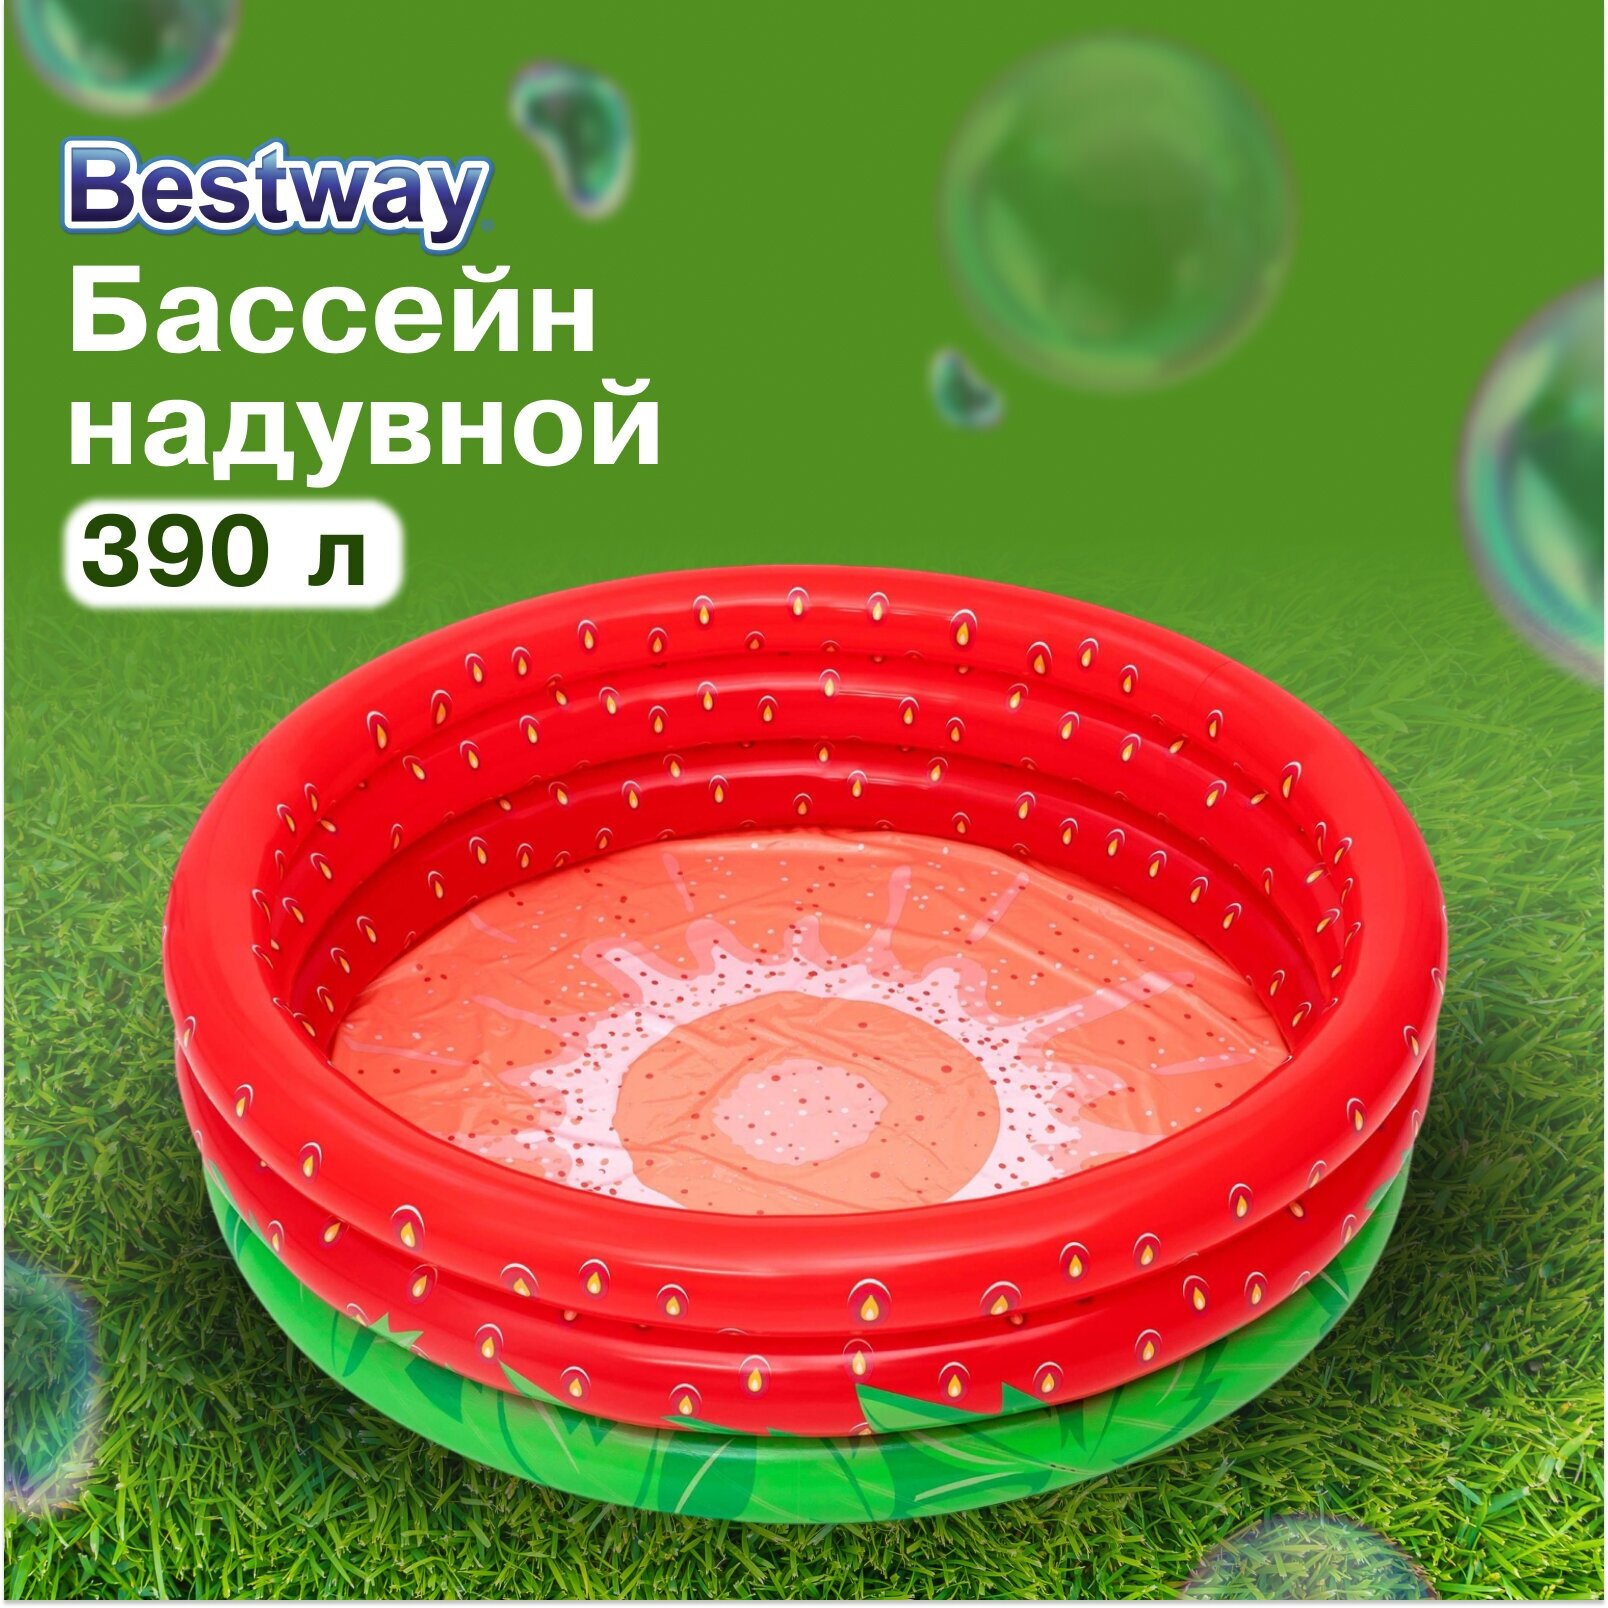 Бассейн надувной Bestway "Sweet Strawberry", размер 160 x 160 х 38 см, 51145, цвет красный, зеленый